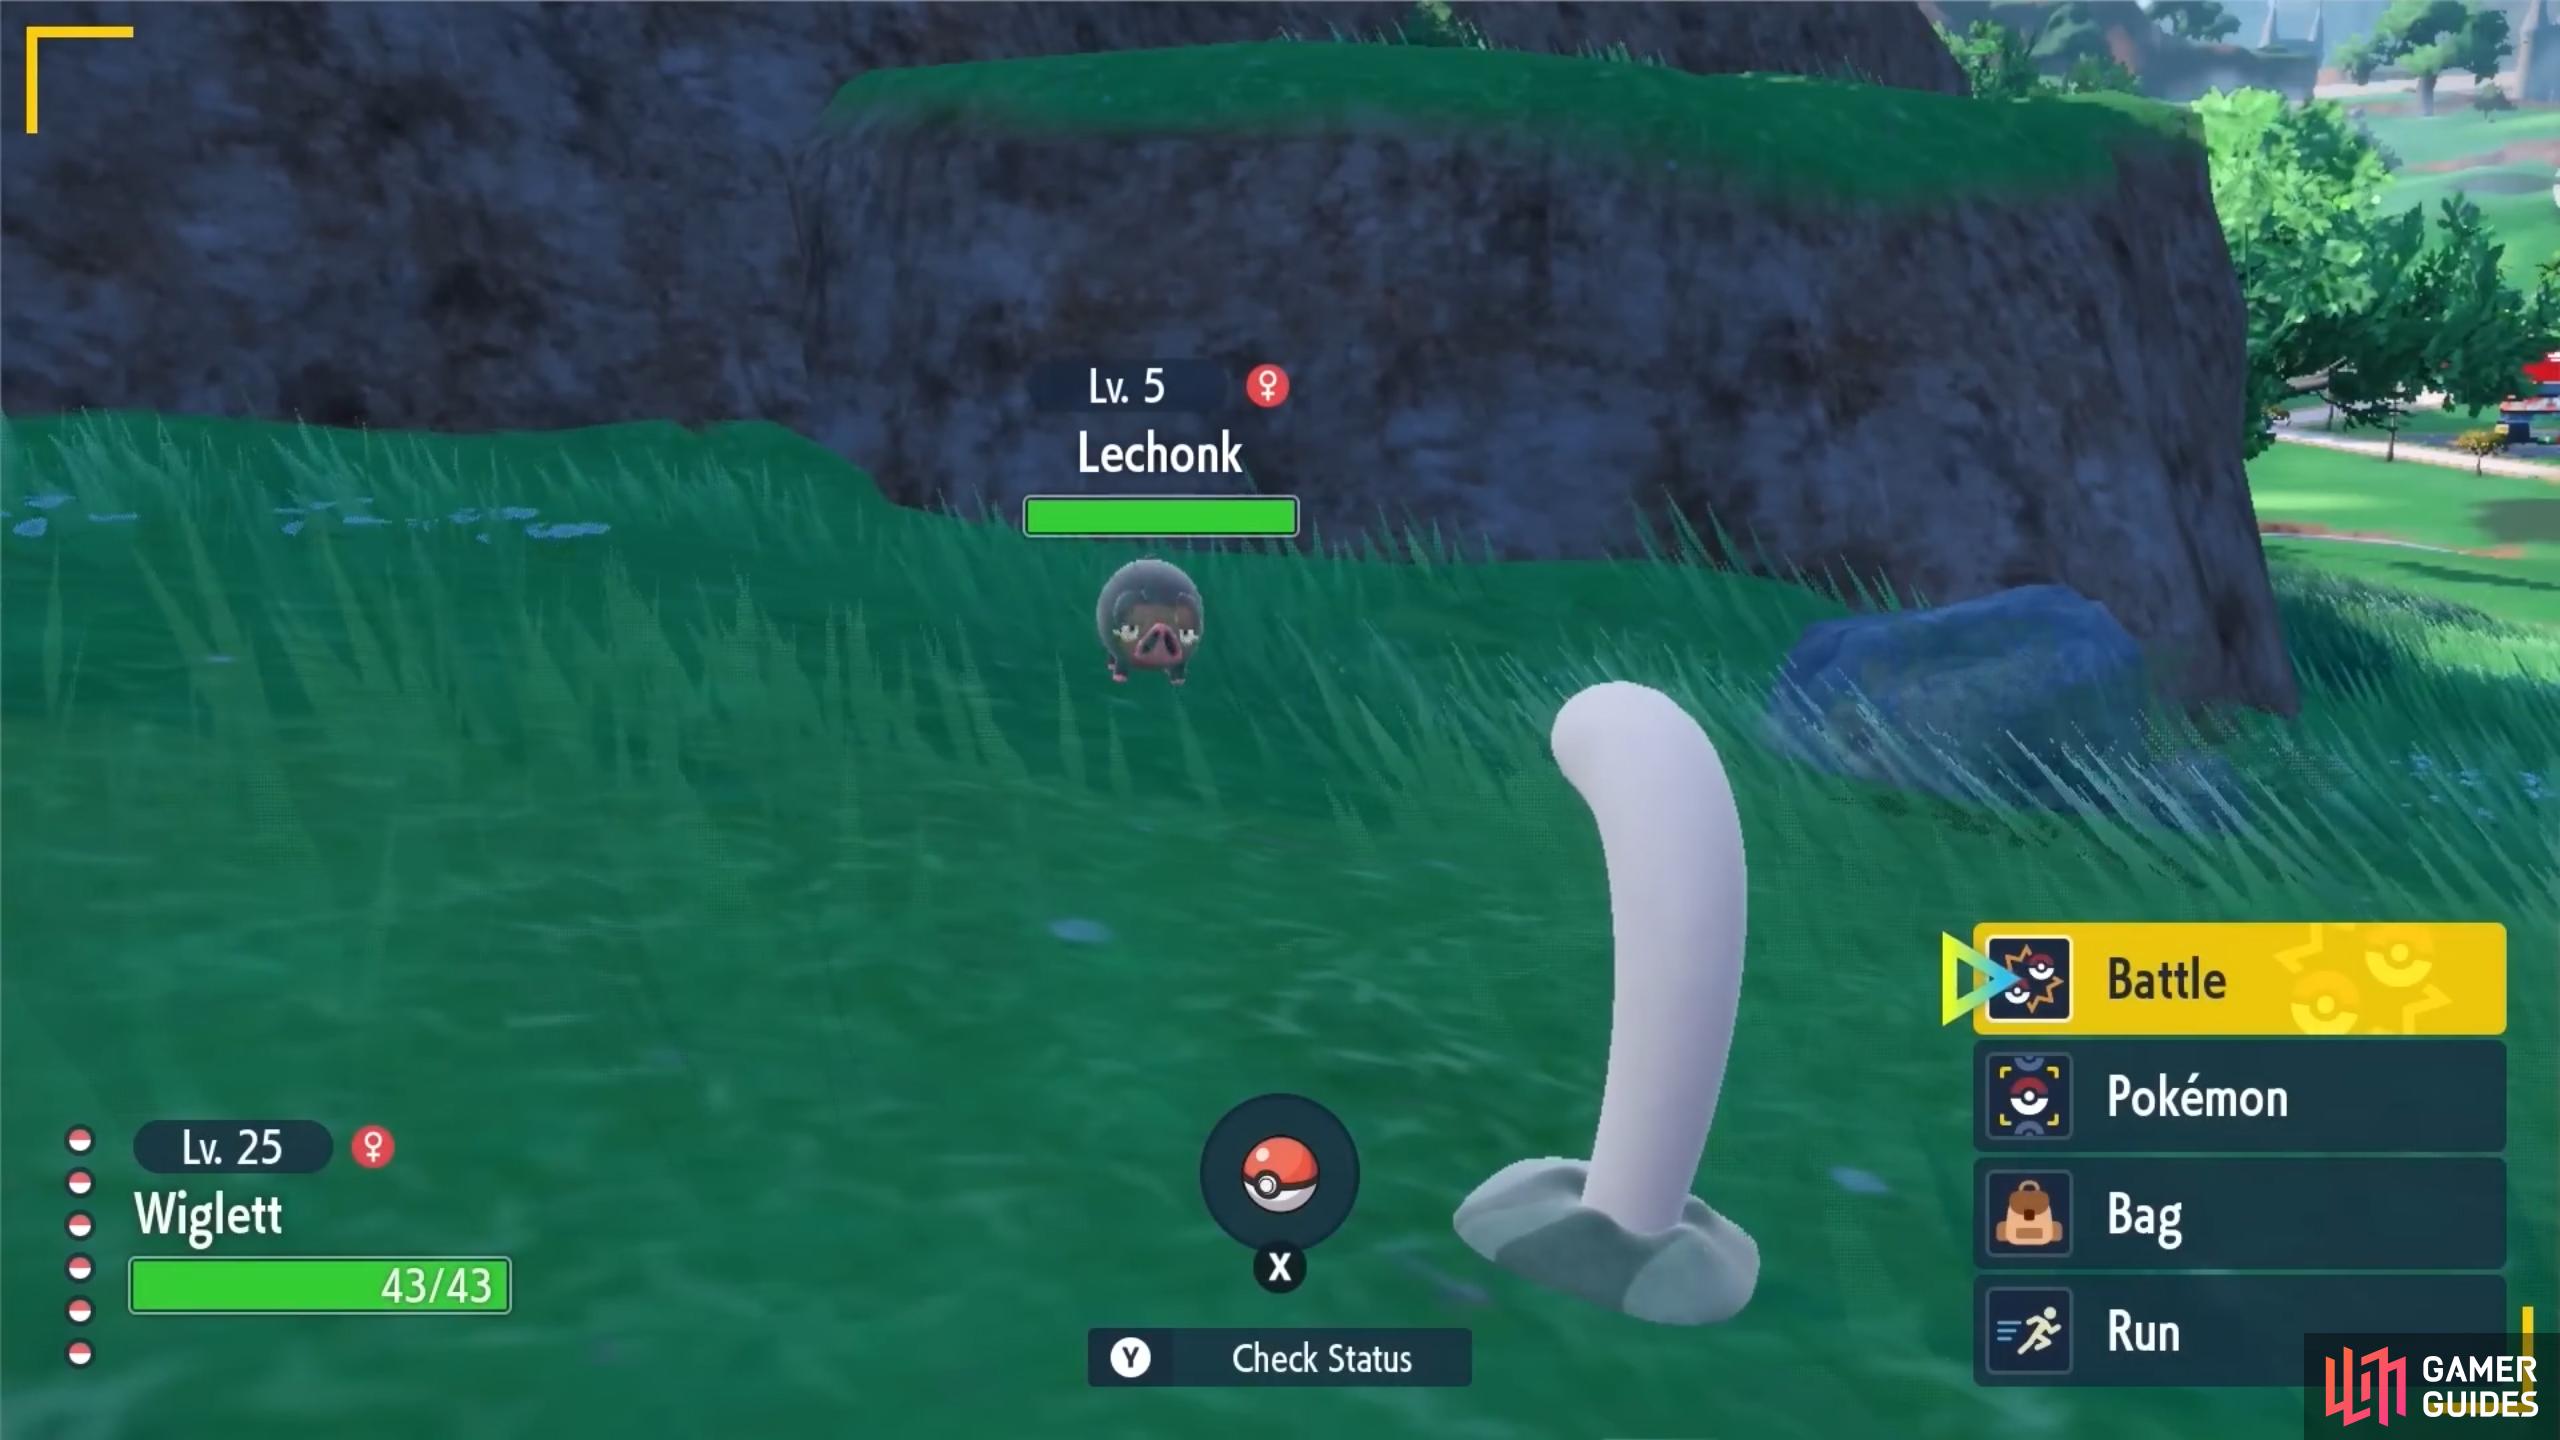 During a wild Pokémon battle, you can use Poké Balls. (Credit: Serebii)